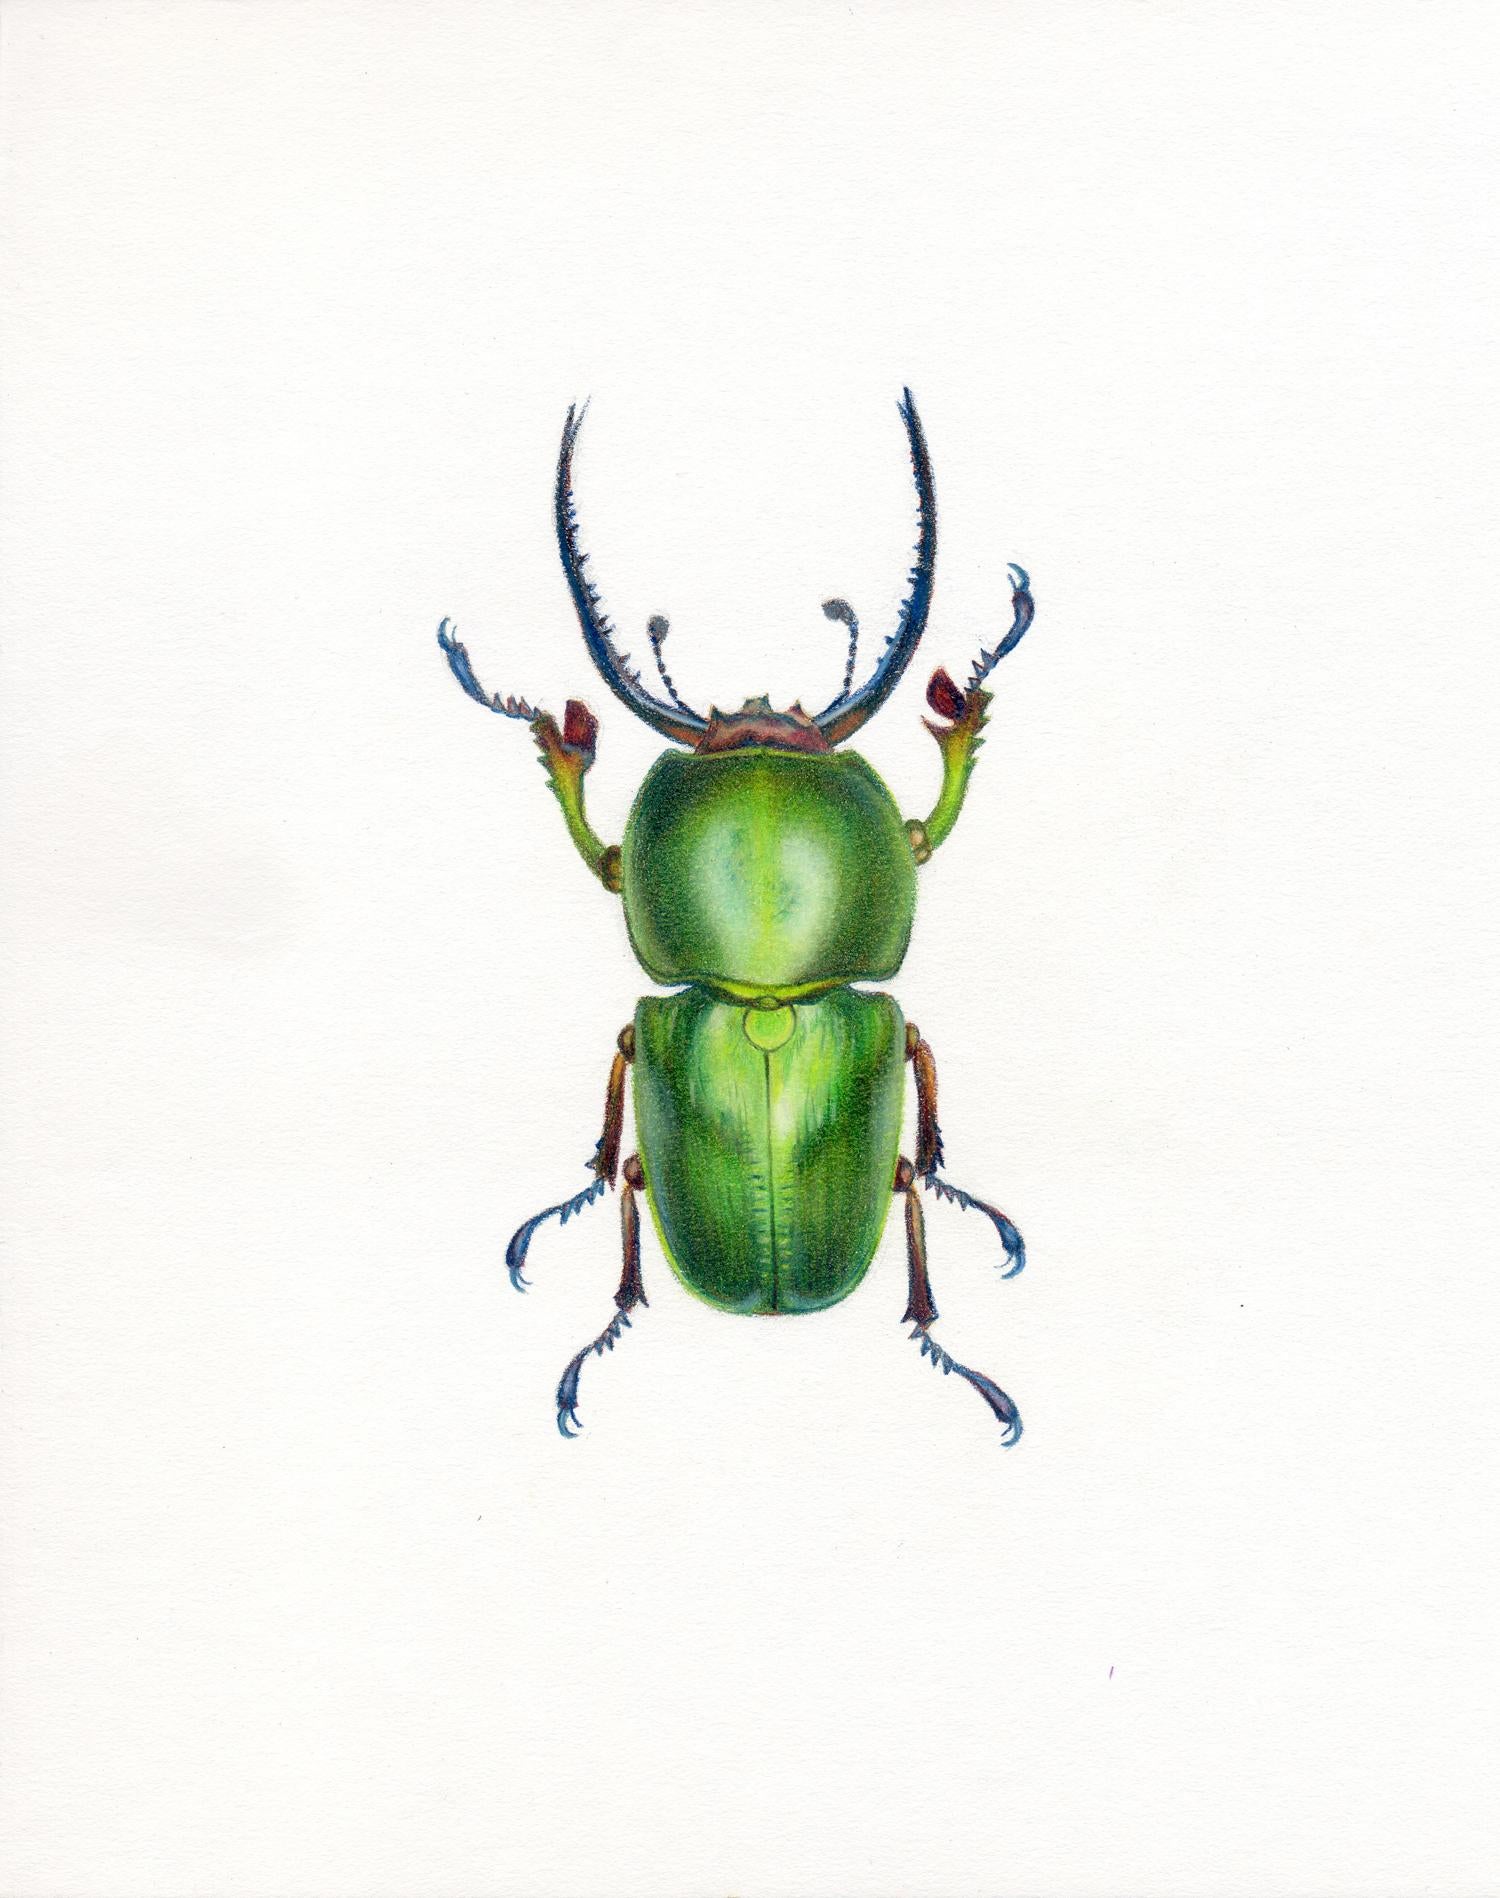 Hannah Hanlon Animal Art - 'Green Beetle #1' - insect illustration - hyperrealism - Chuck Close